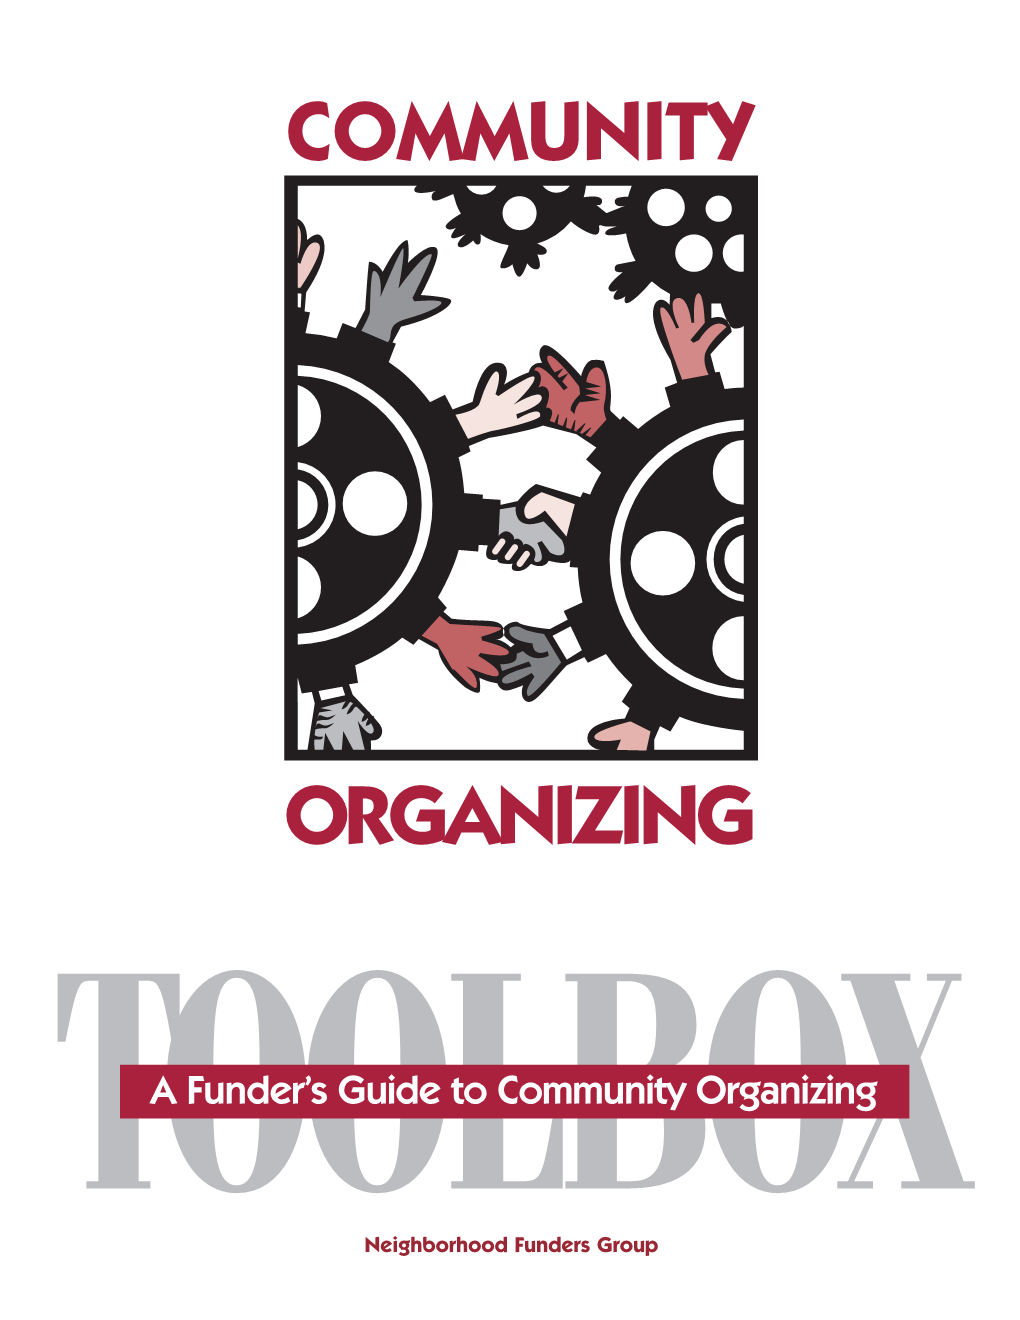 The Community Organizing Toolbox